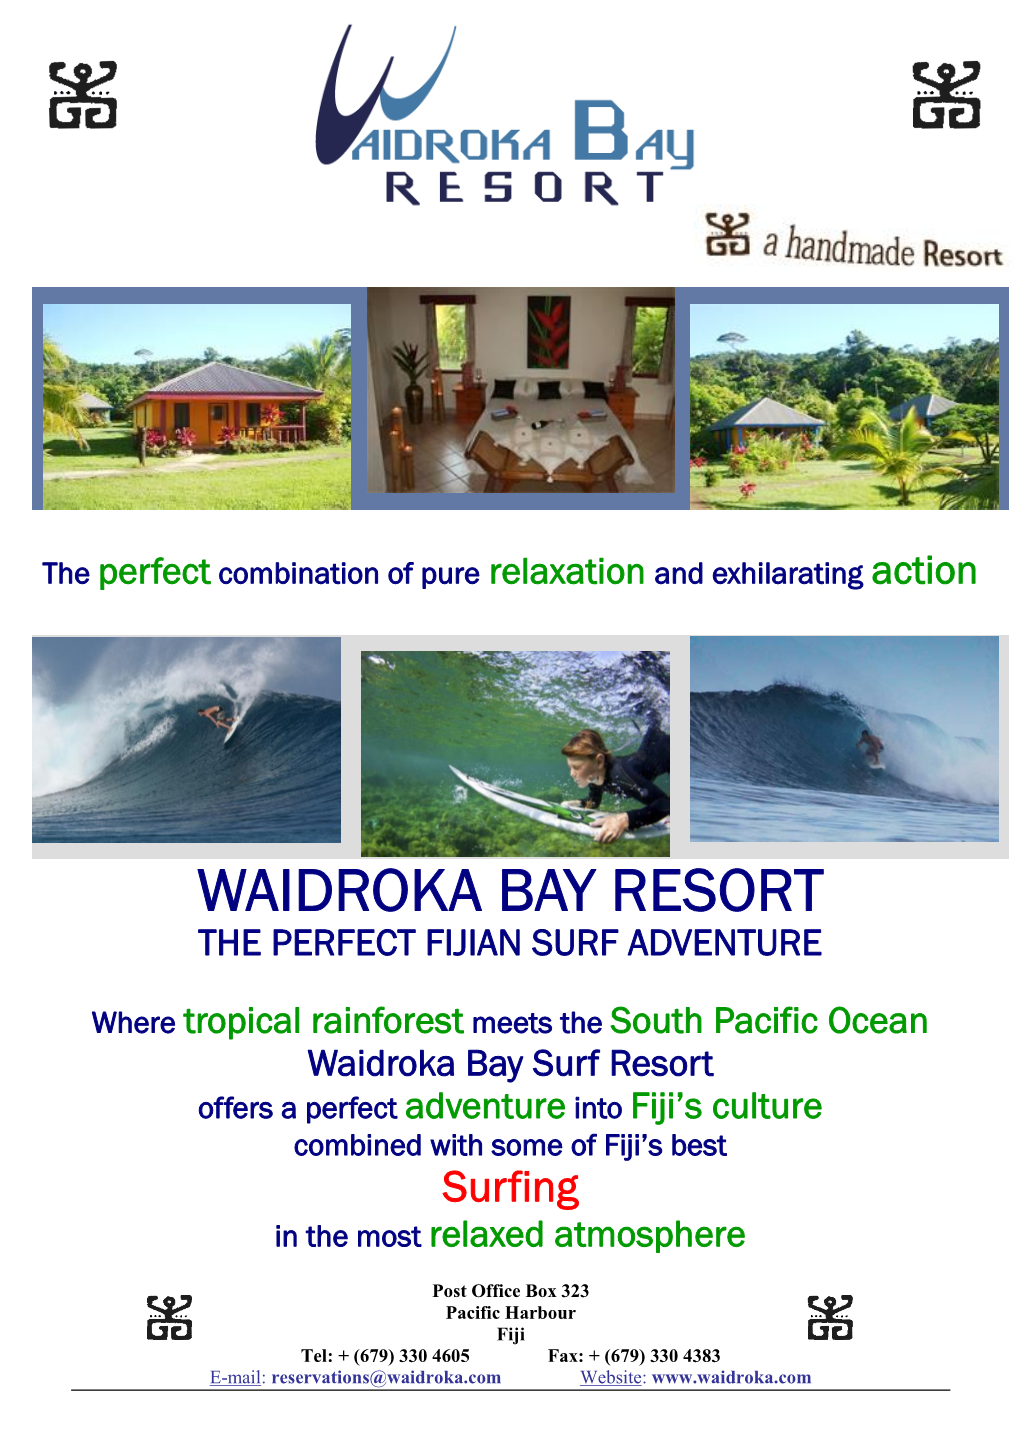 Waidroka Bay Resort the Perfect Fijian Surf Adventure